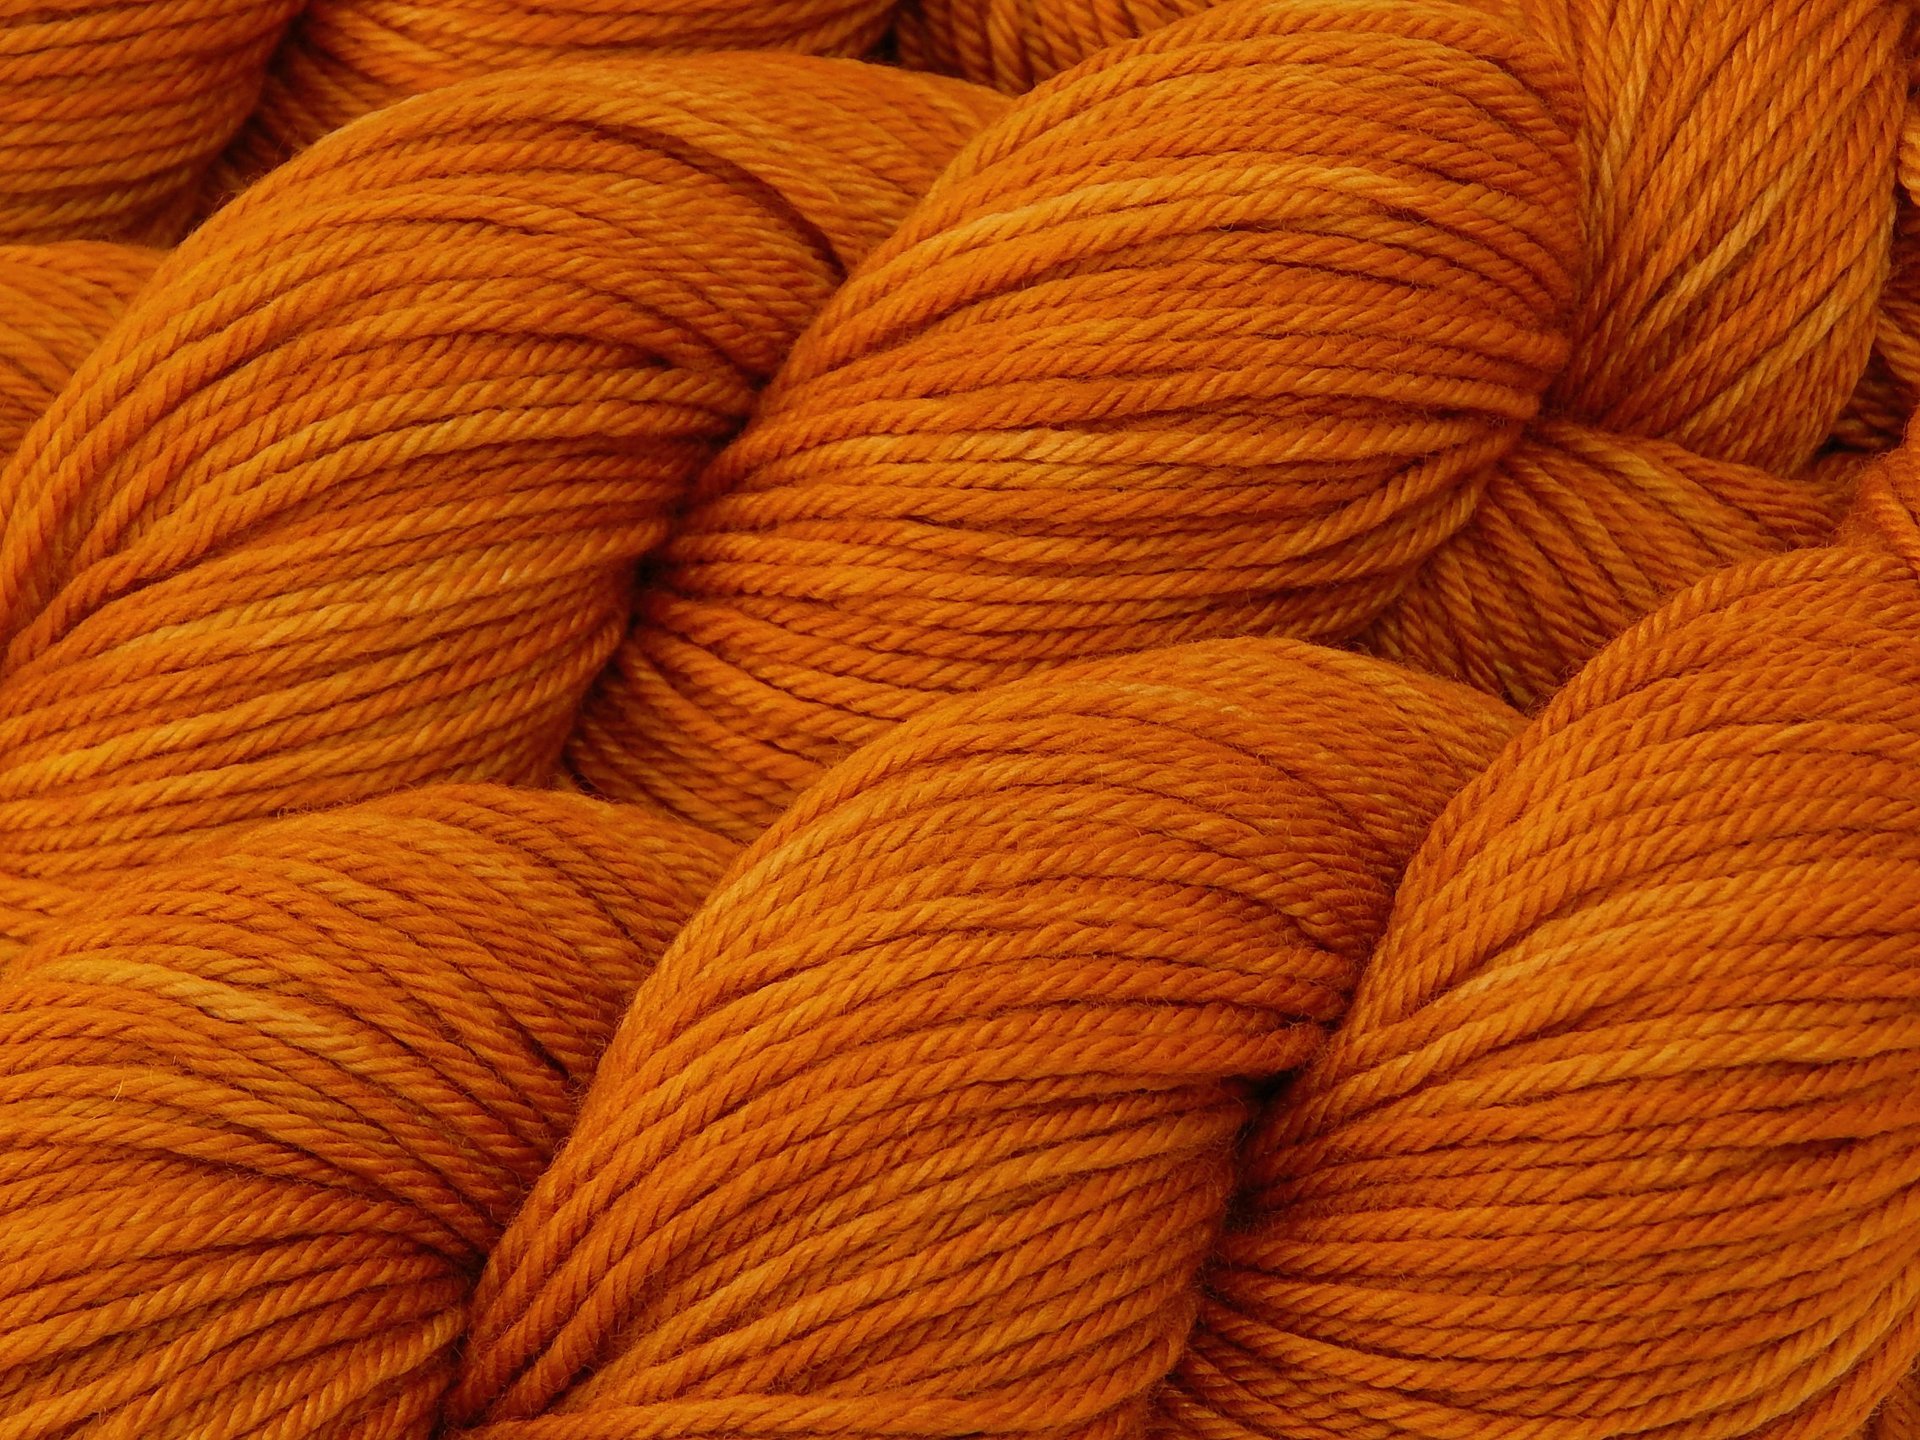 Worsted Weight Hand Dyed Yarn, Superwash 100% Merino Wool - Copper - Indie Dyed Semi Solid Orange Knitting Yarn, Fall Autumn Craft Supply